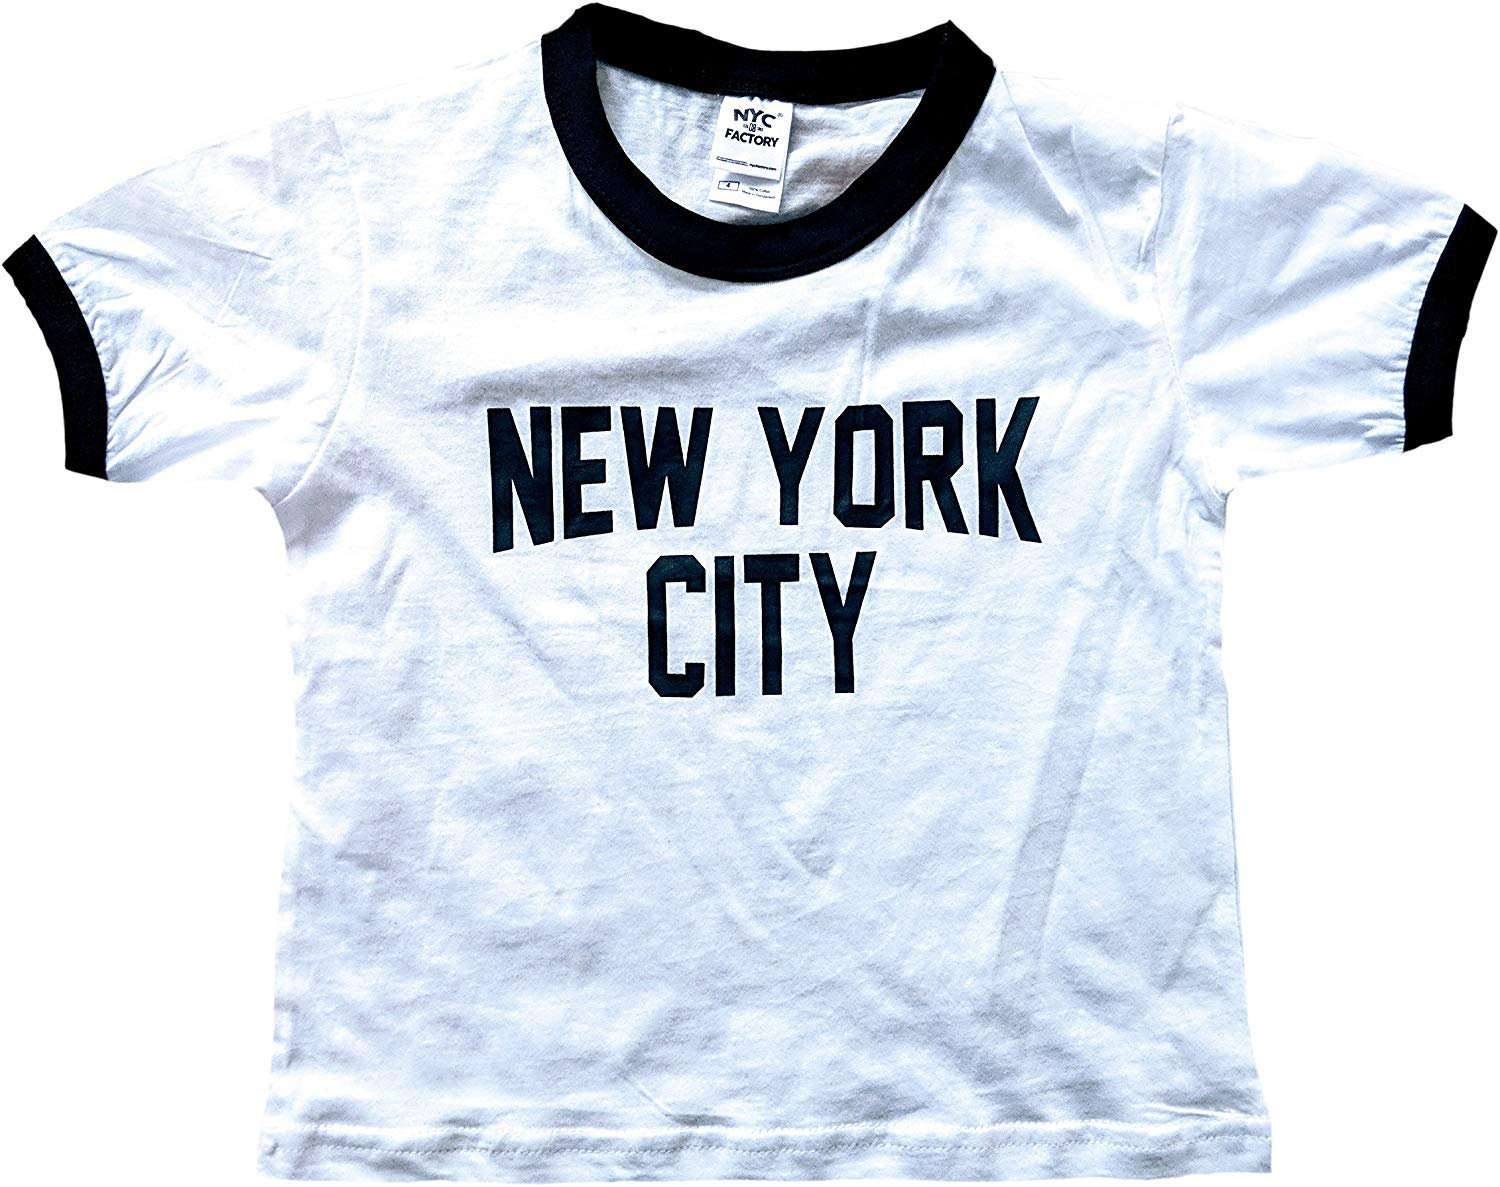 New York City Crewneck Sweatshirt Screen-Printed Lennon Heather Gray